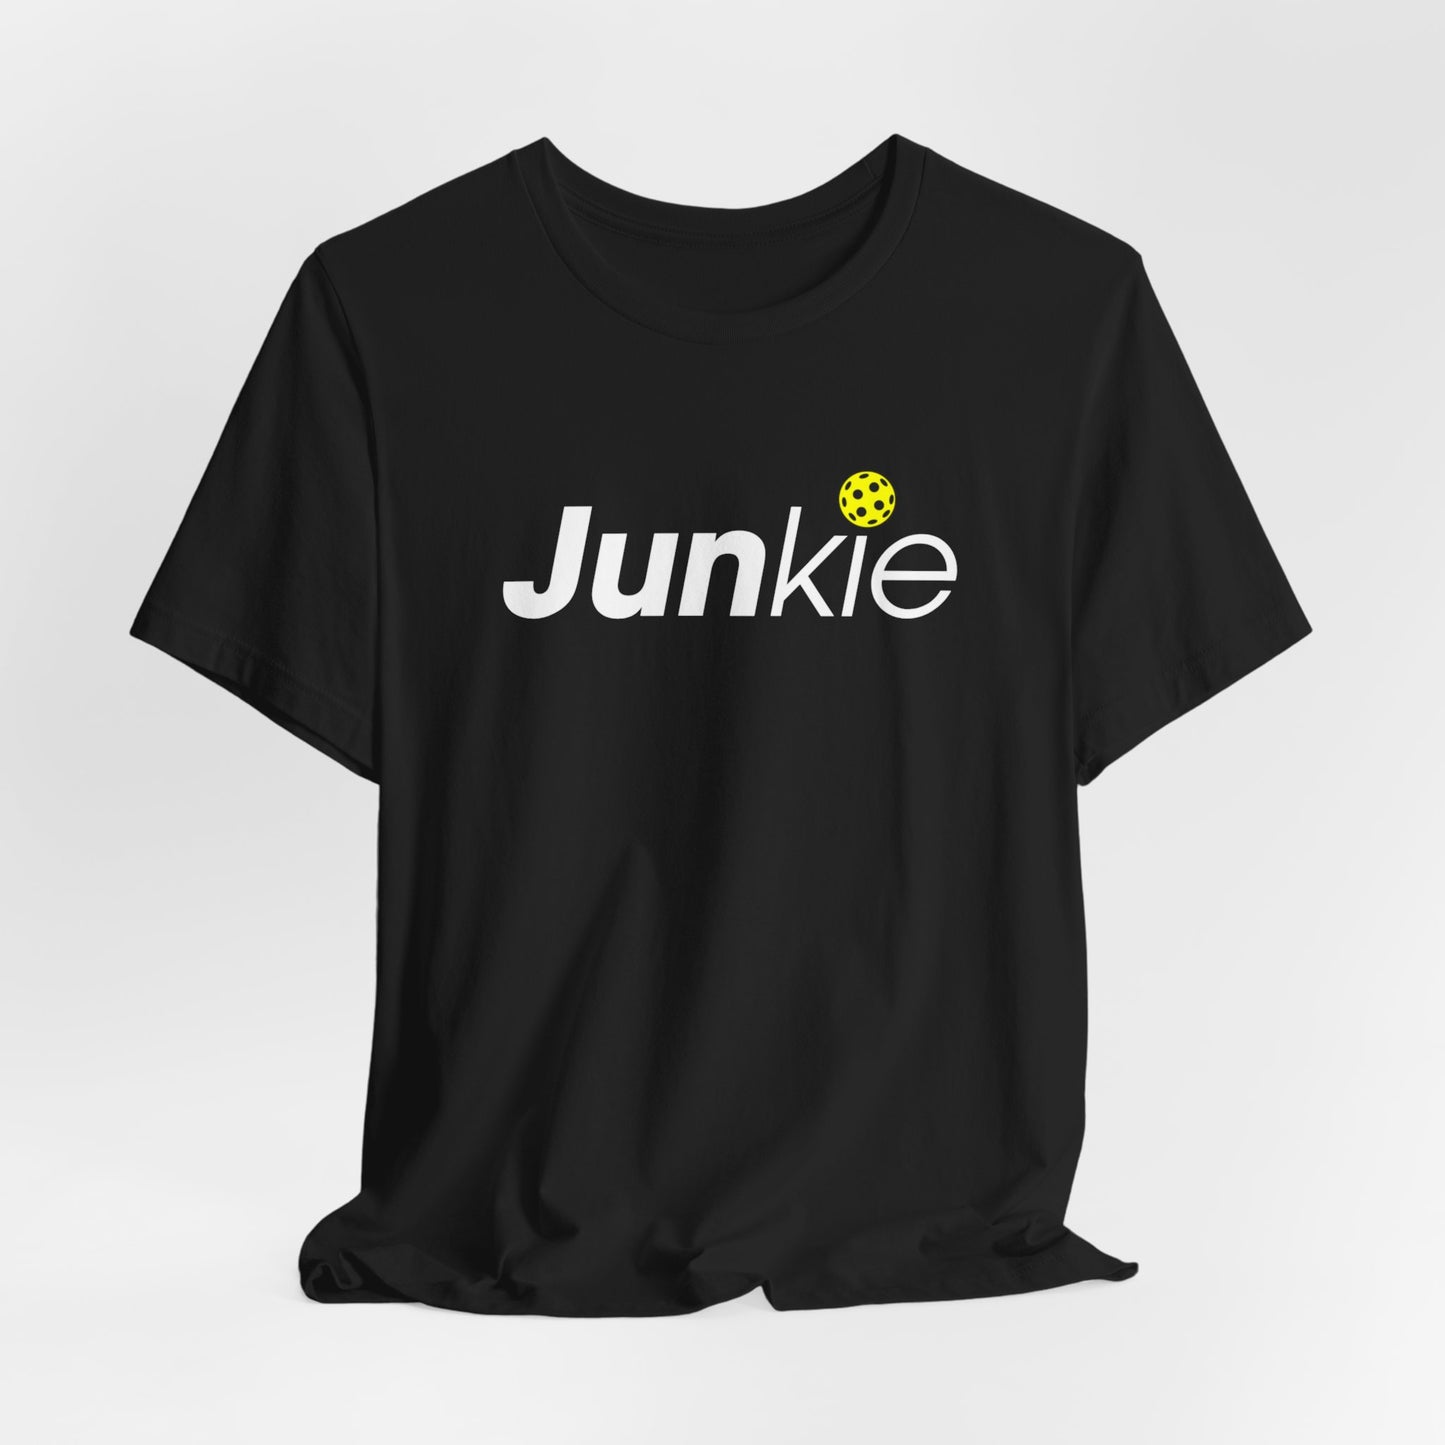 Our stylish, fresh Pickleball Junkie Unisex Premium Pickleball T-Shirt